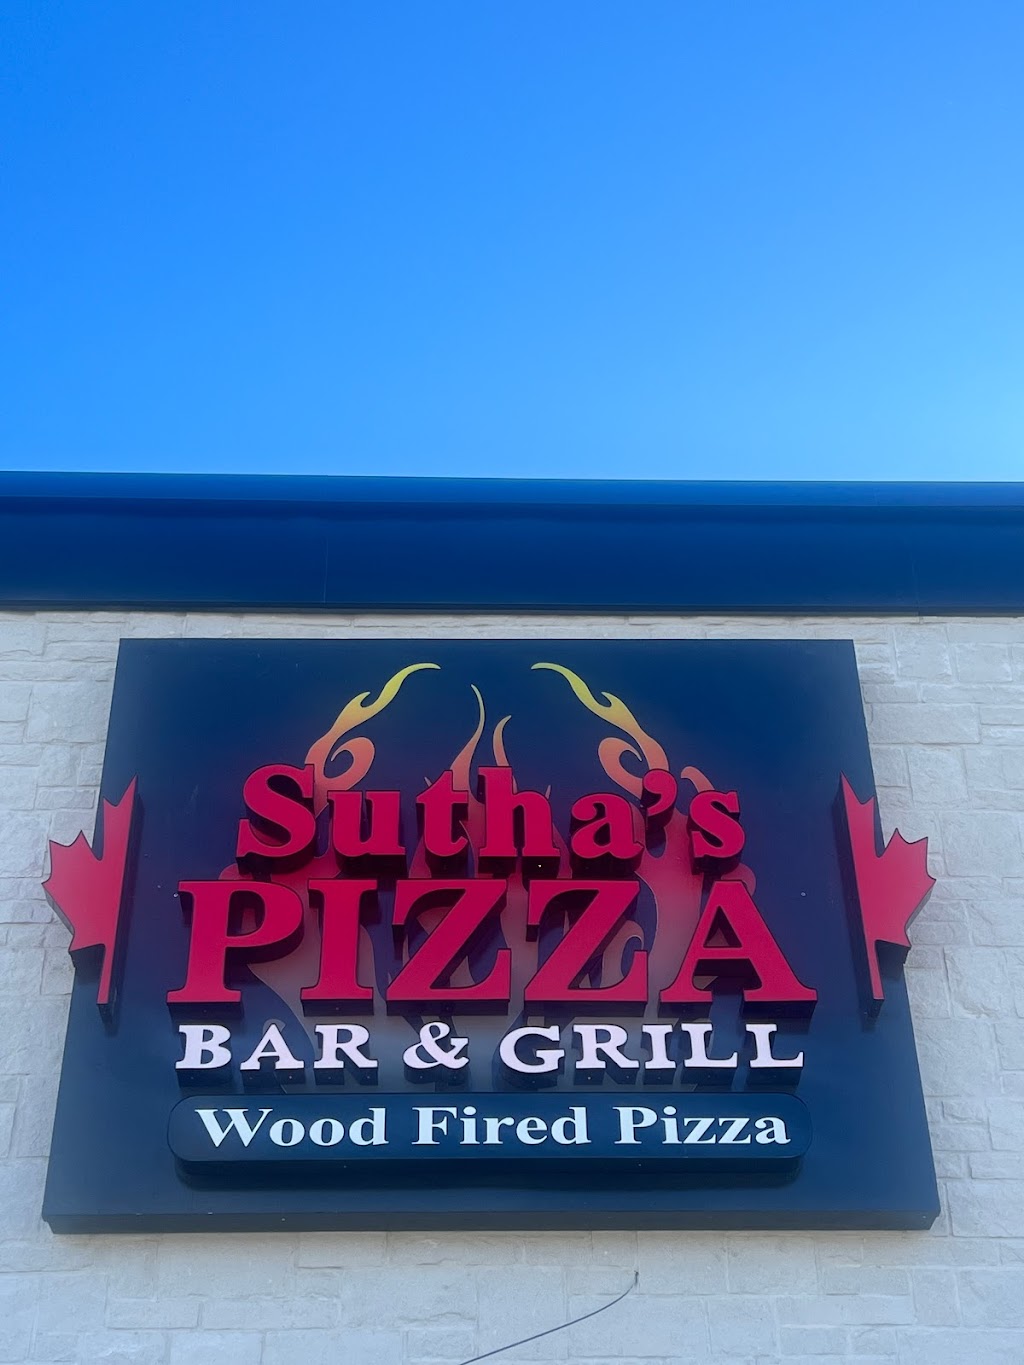 Suthas Pizza Bar & Grill | 79 E Davis St, Trenton, ON K8V 4K9, Canada | Phone: (613) 392-2123